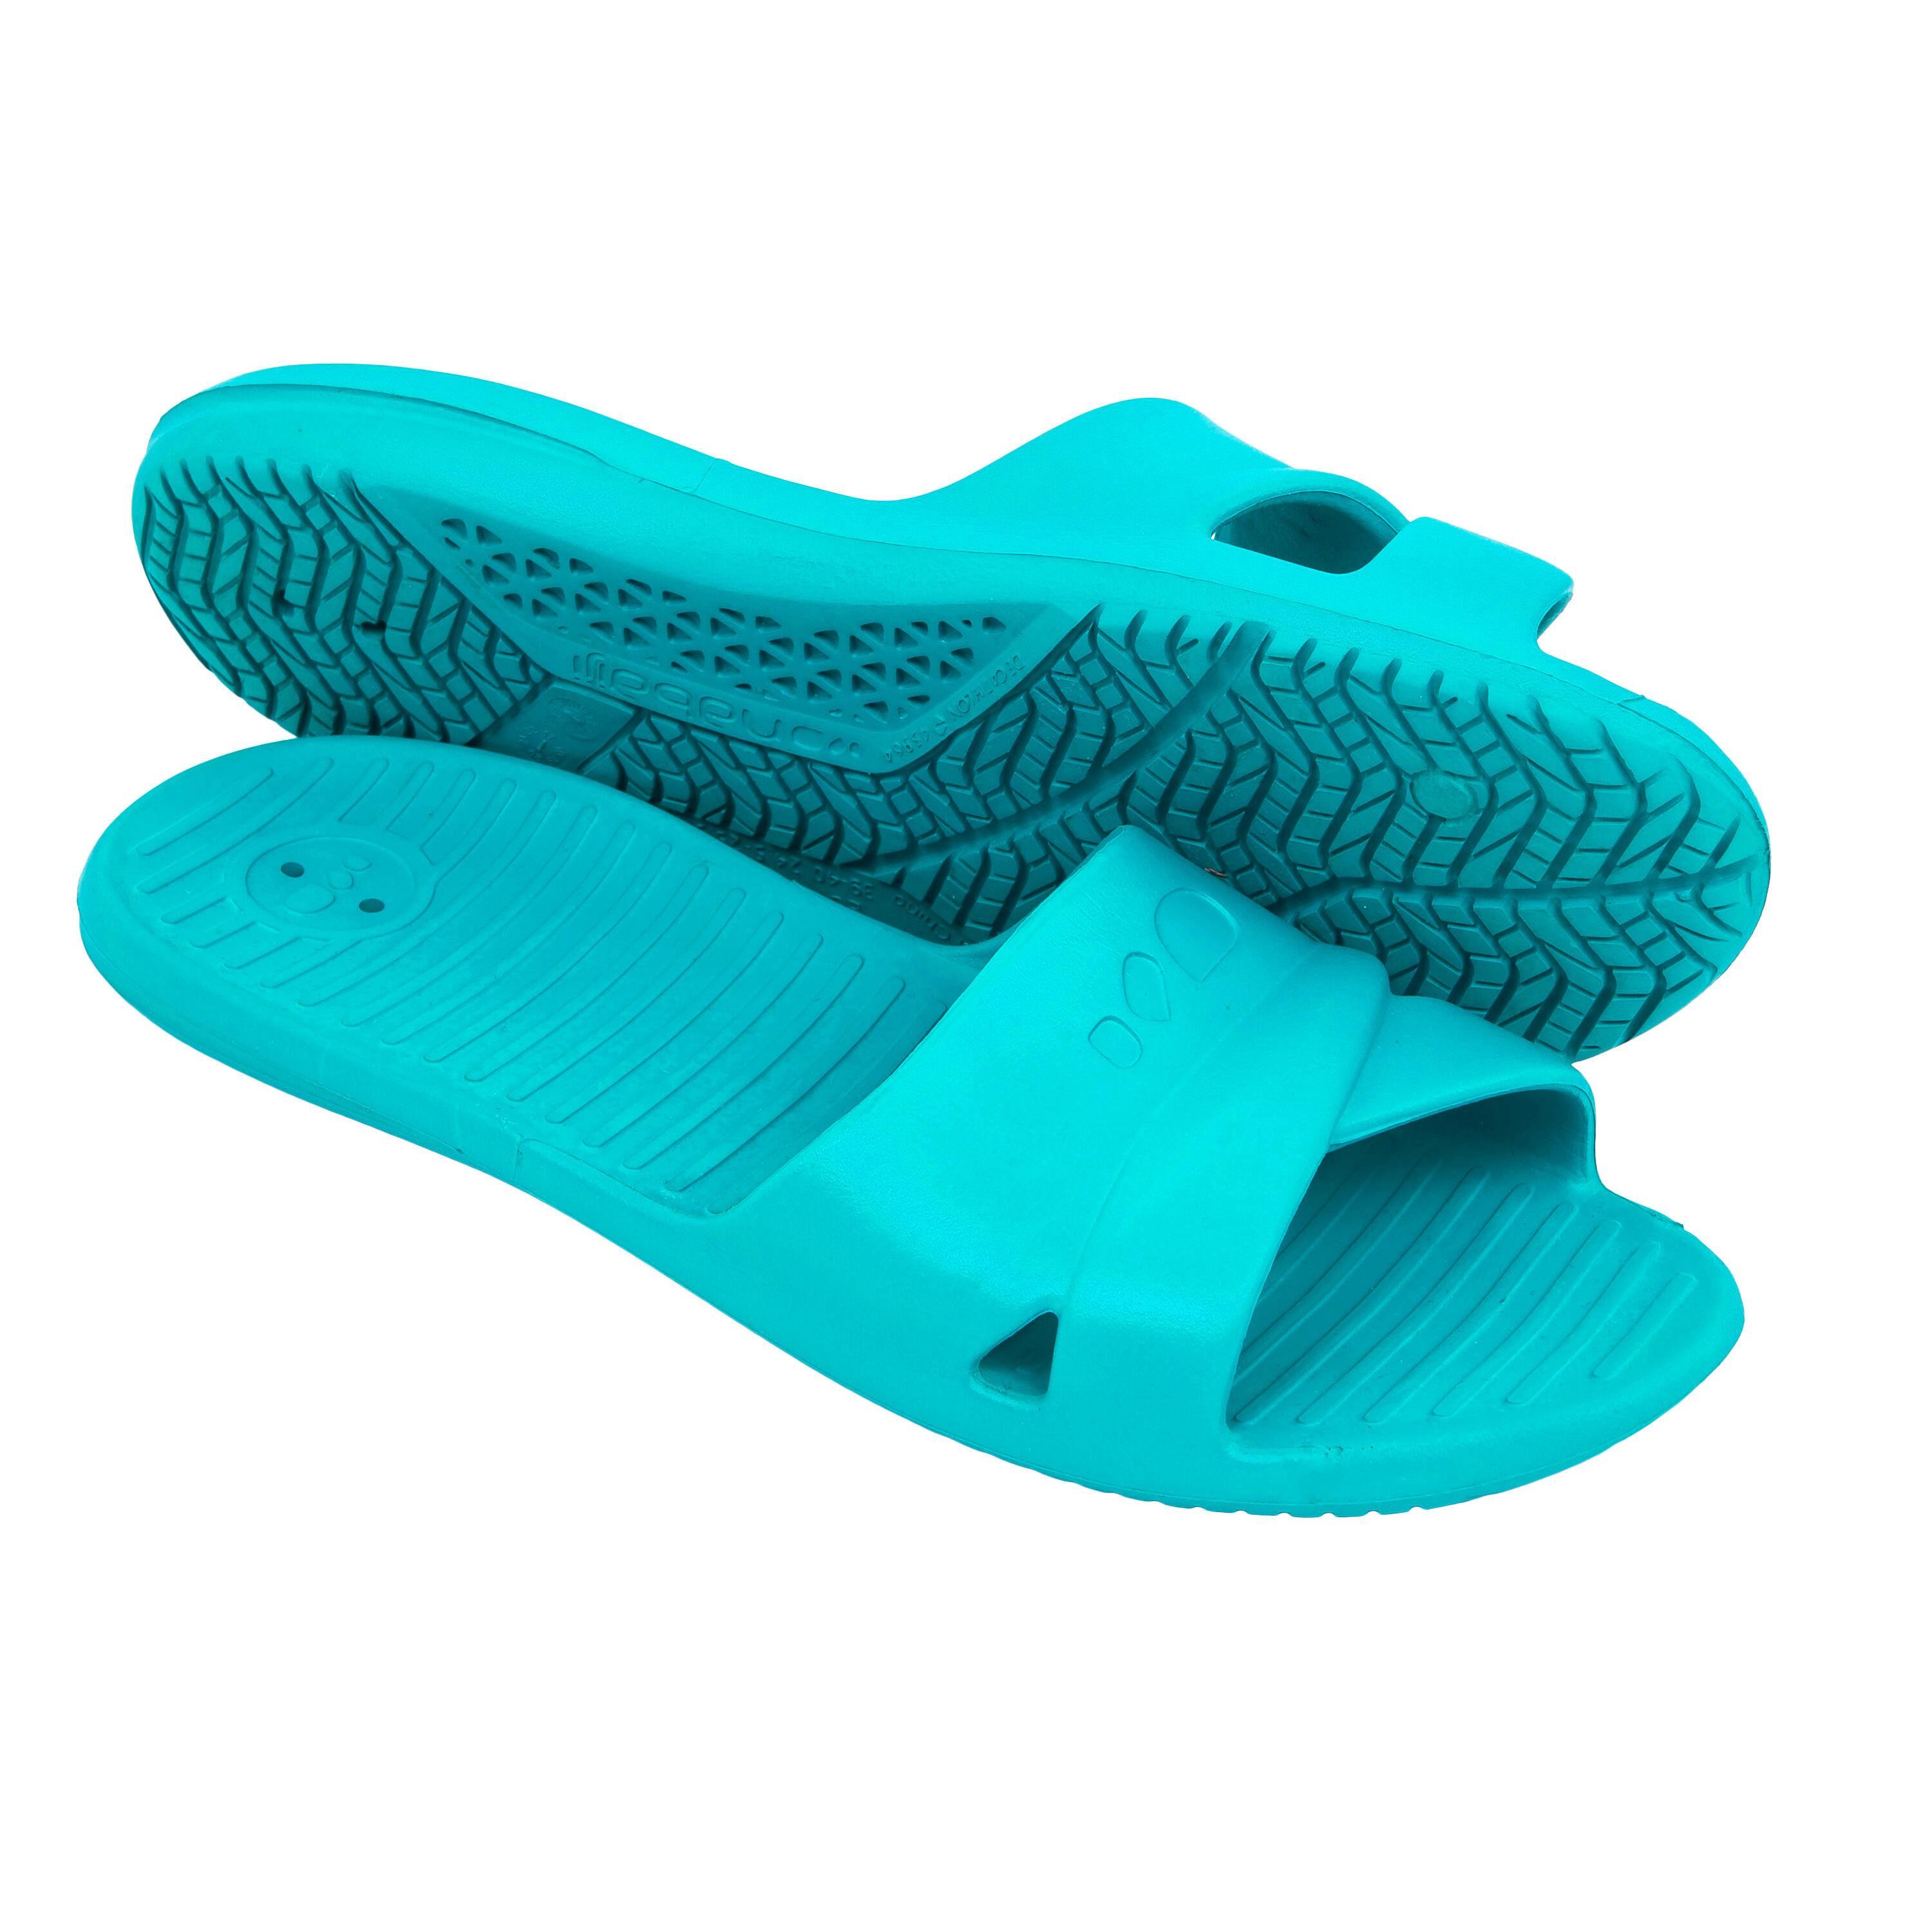 Buy Sandal for Men Online| Arpenaz 50 Hiking Sandal Black